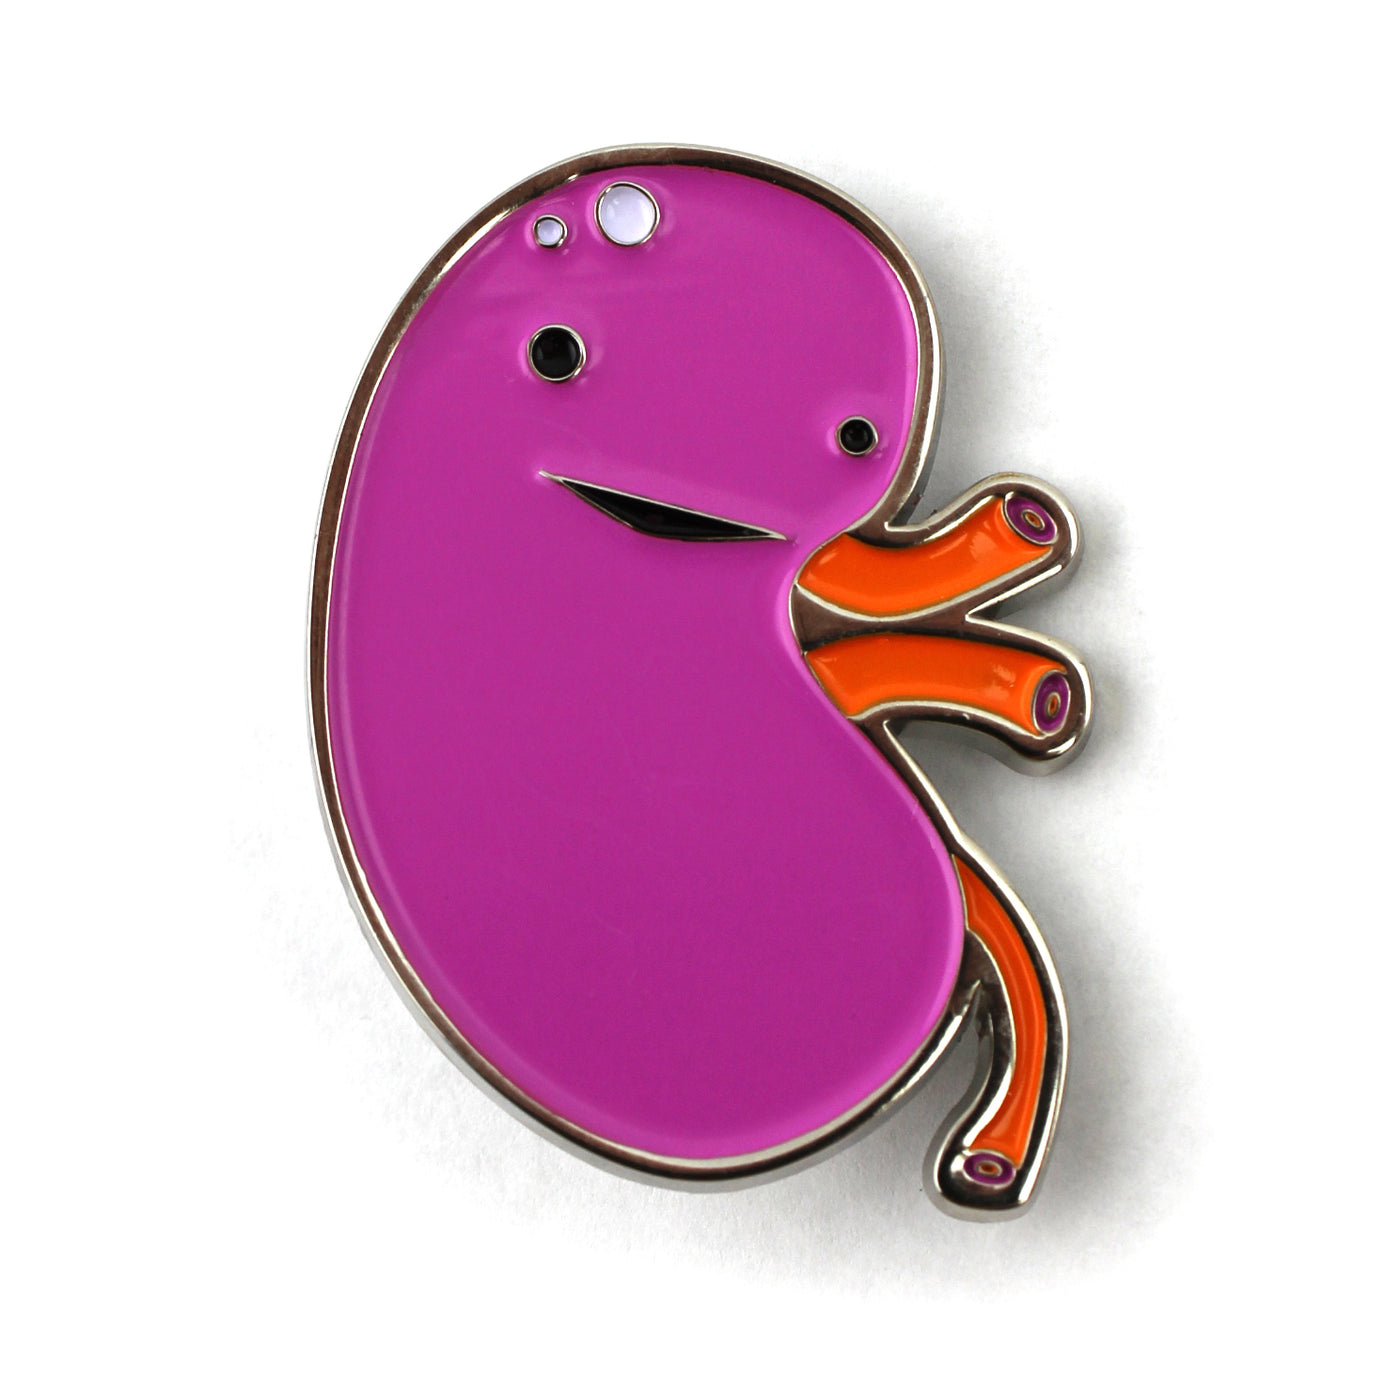 Kidney Enamel Pin | Cute Kidney Donor Pin - Kidney Health, Dialysis Pins